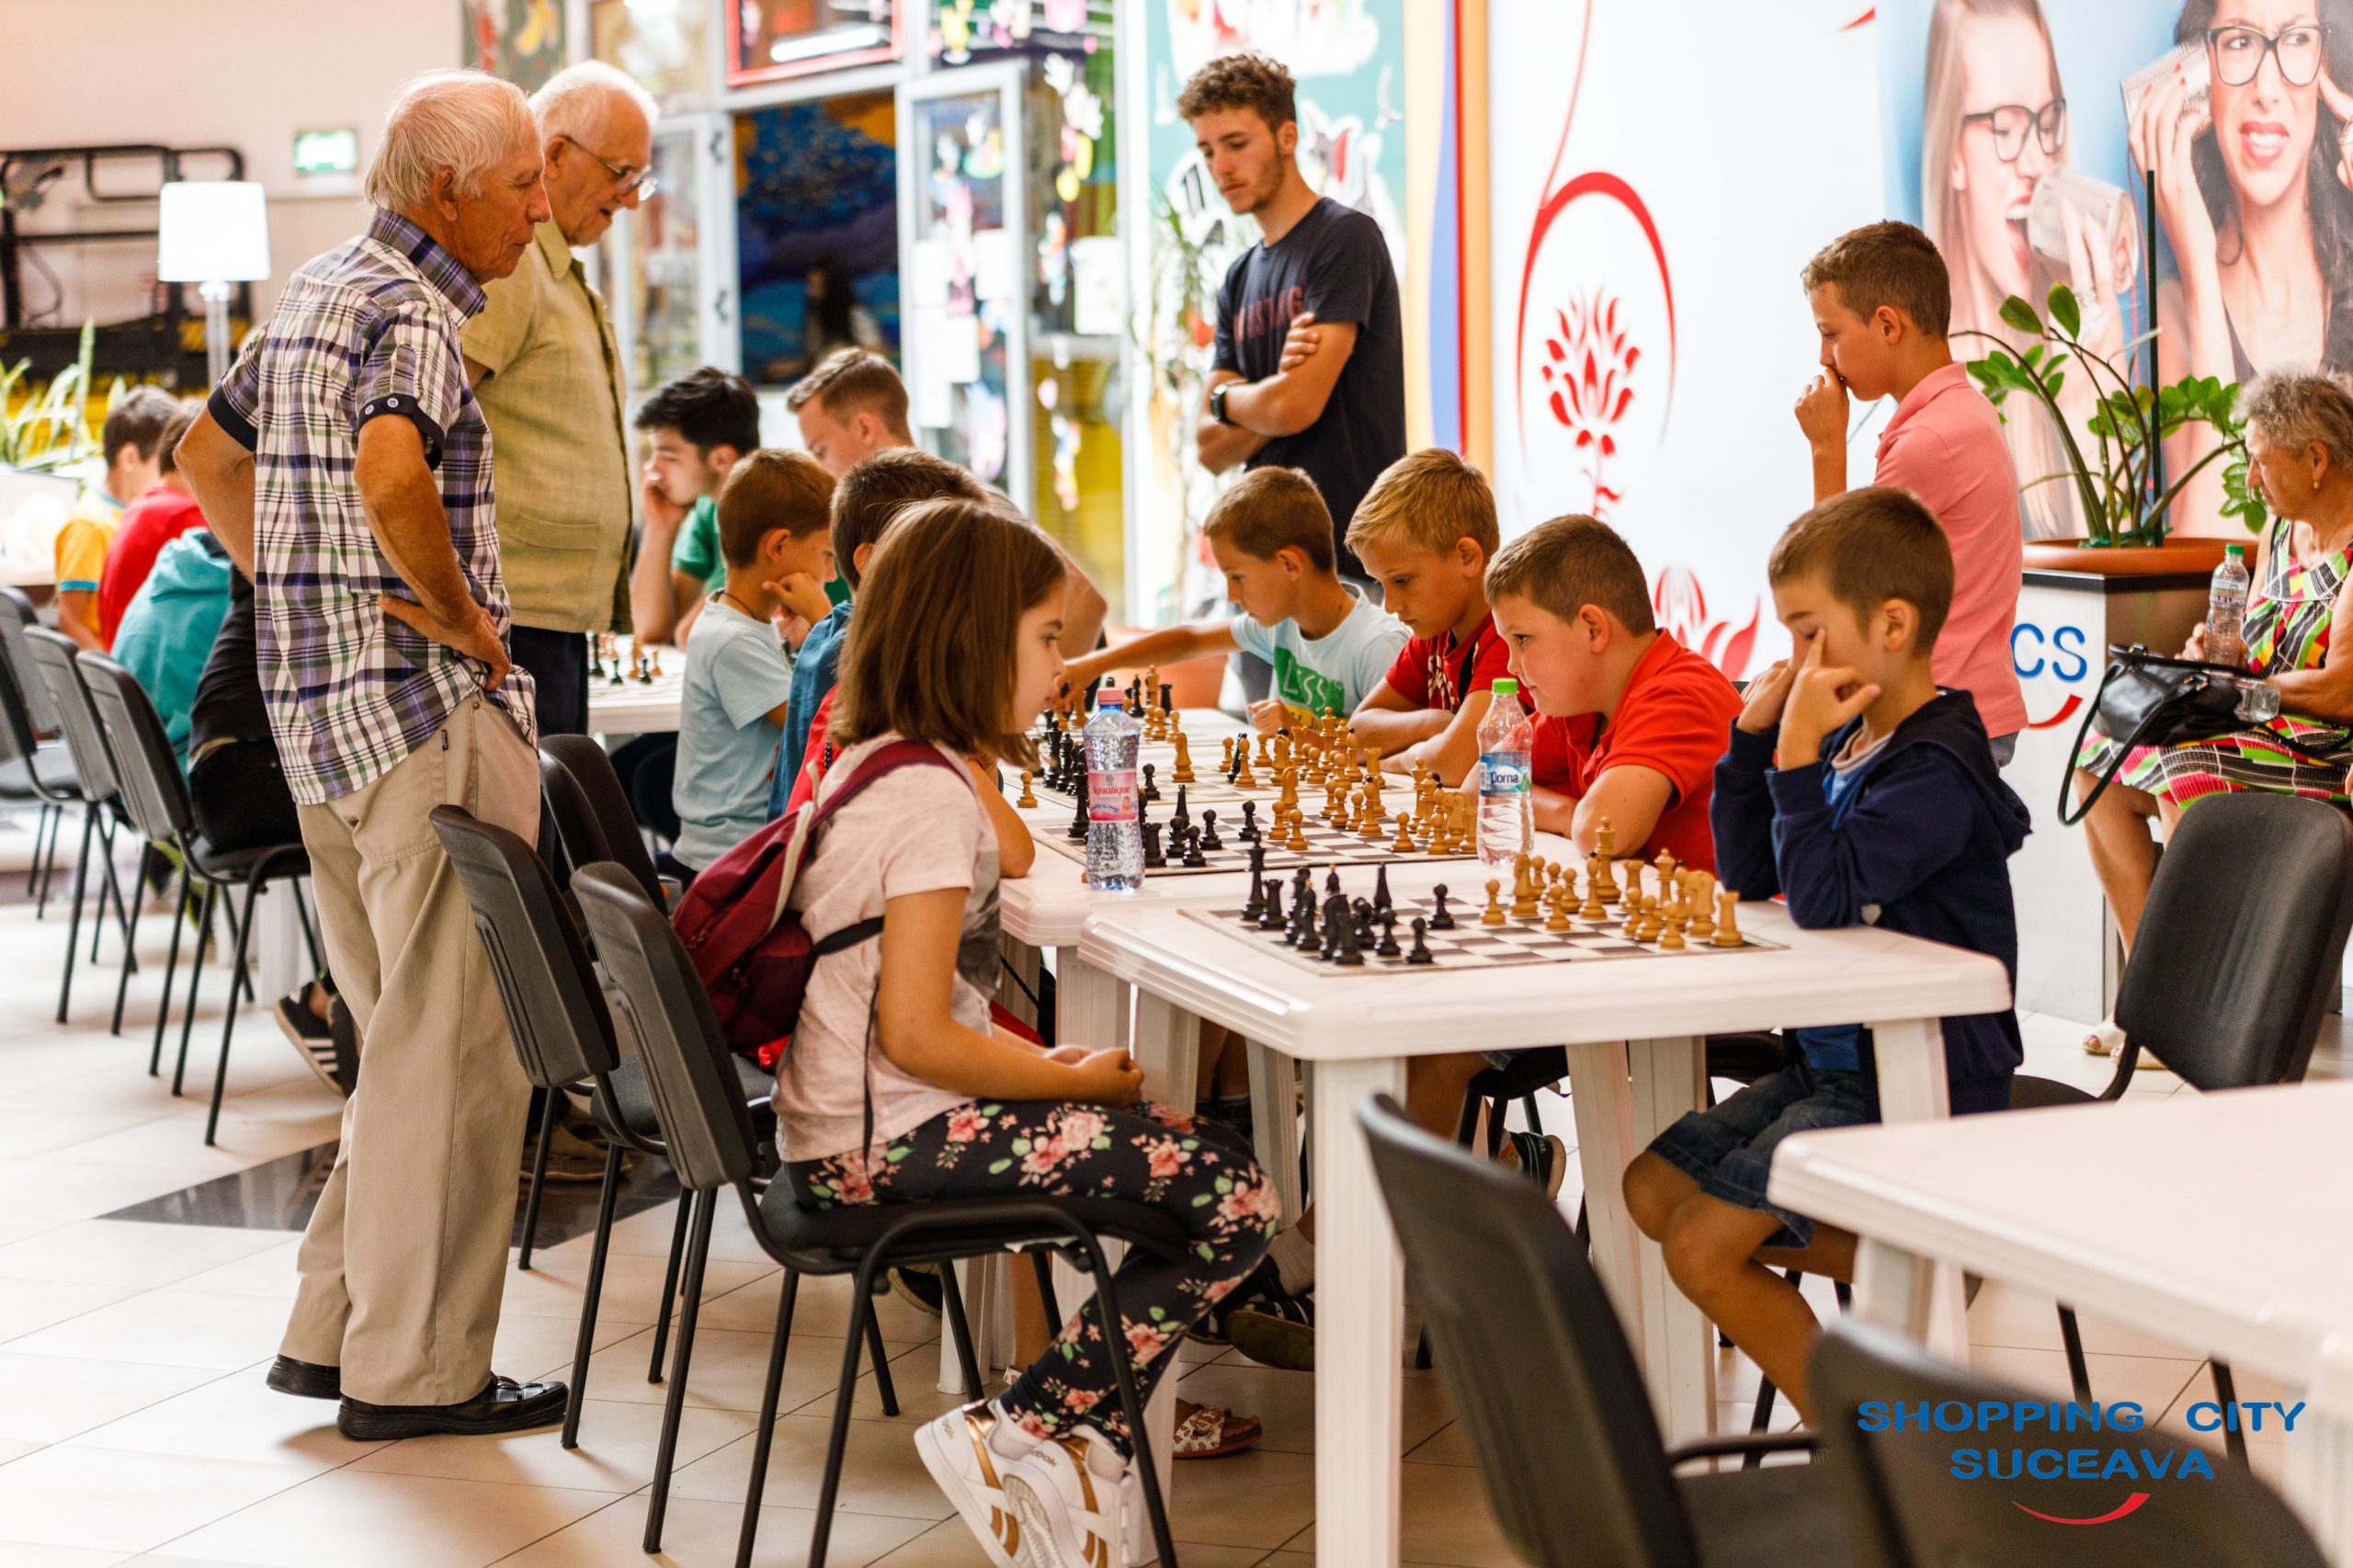 Concursuri de şah la Shopping City Suceava